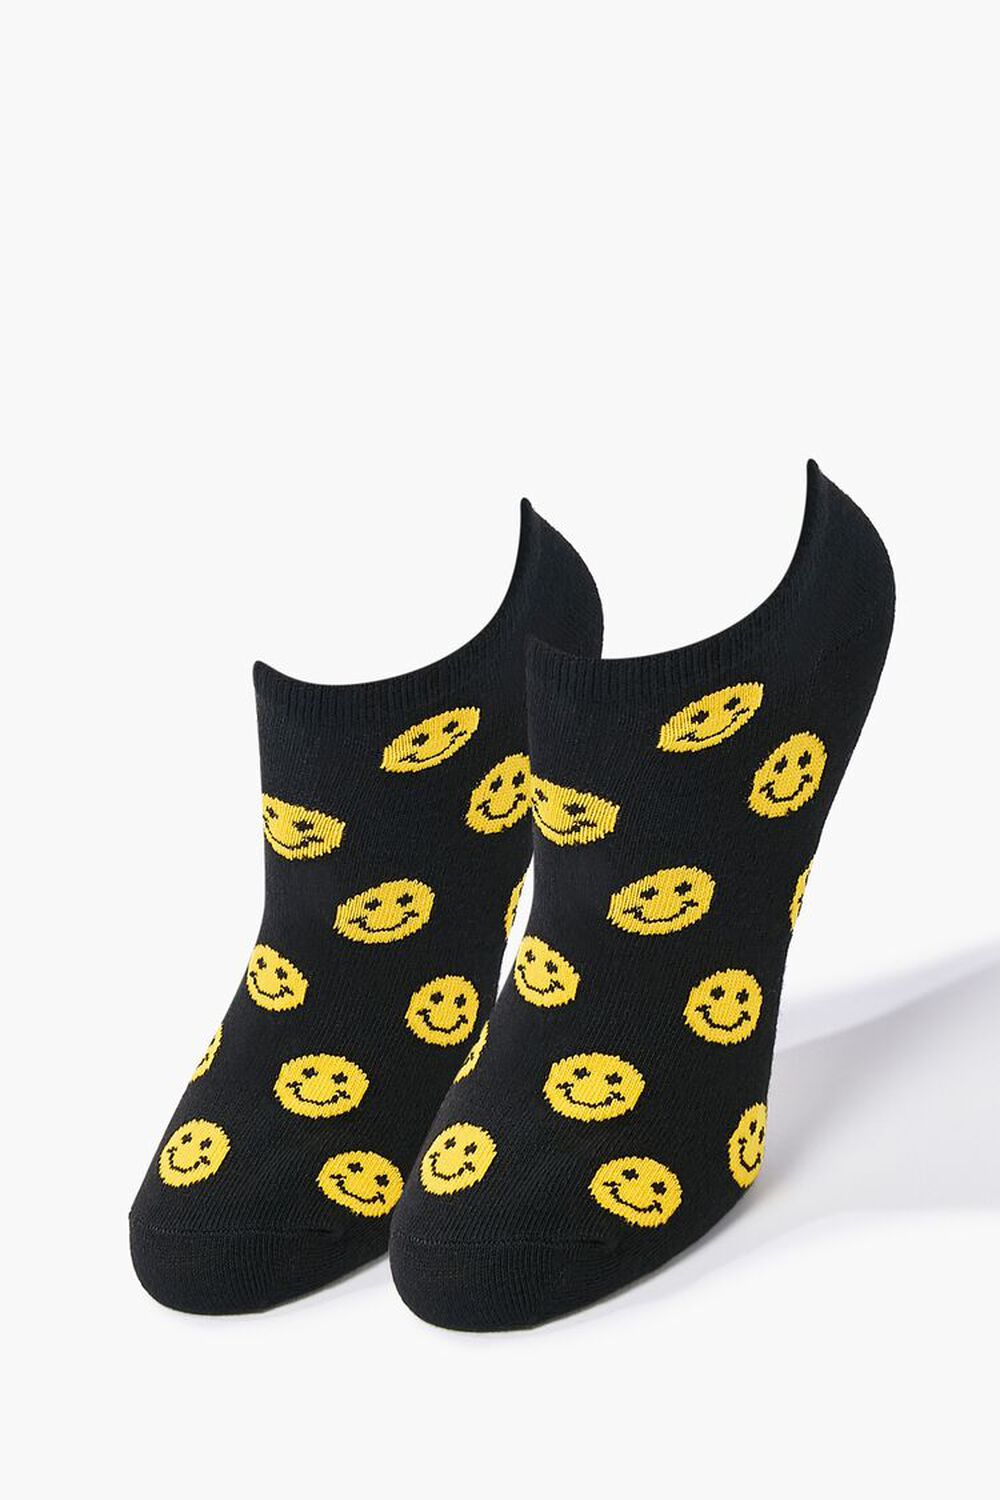 BLACK/MULTI Smiling Face Print Ankle Socks, image 1